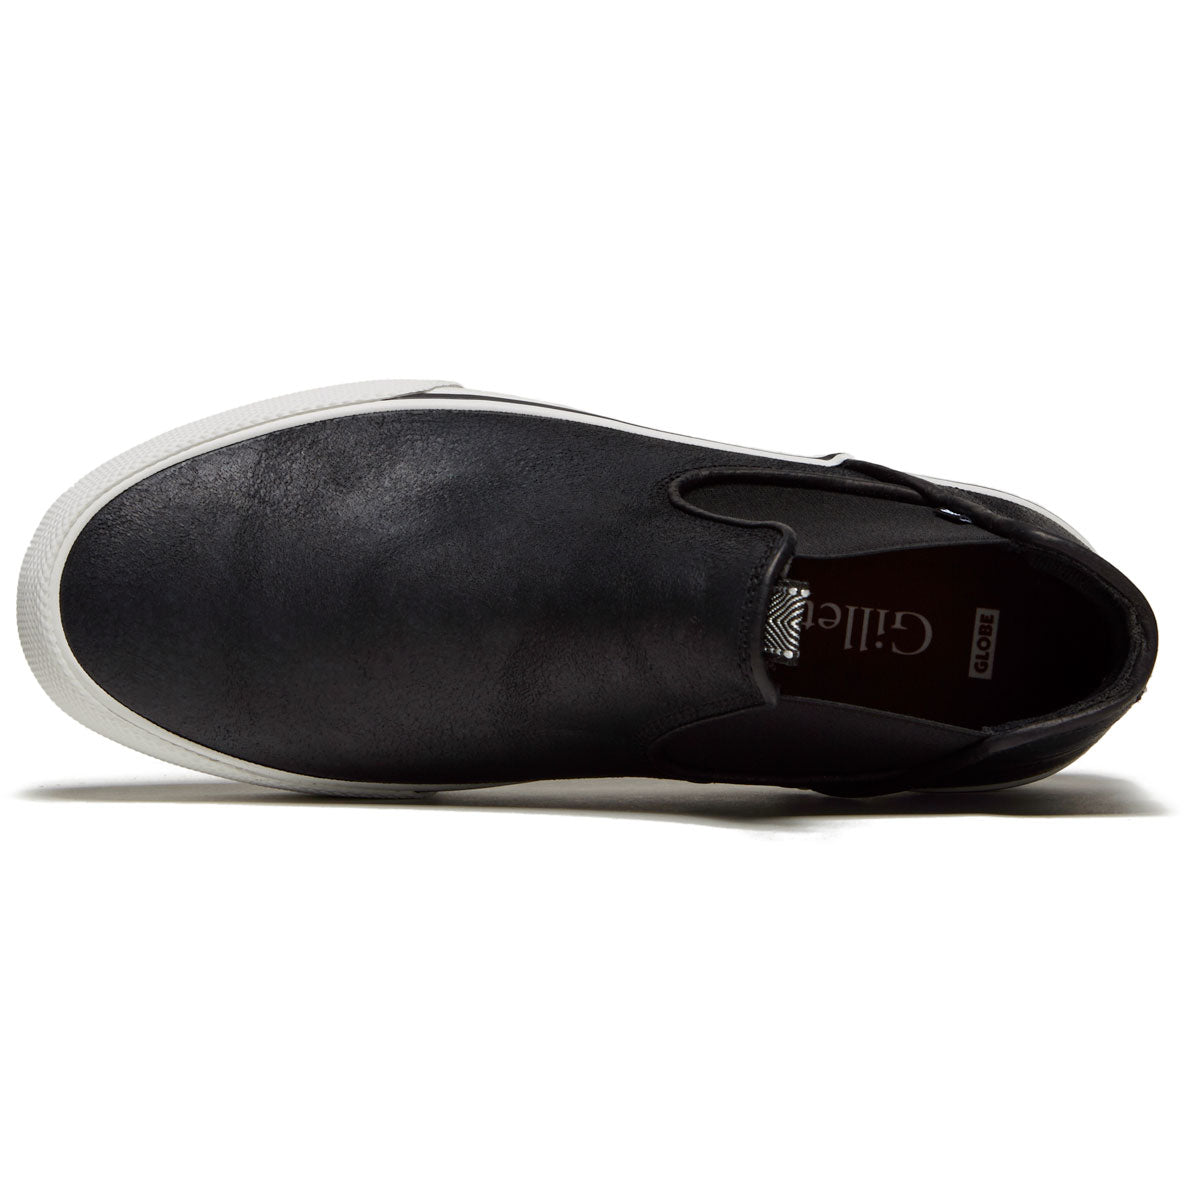 Globe Dover Shoes - Black Distress/Gillette image 3